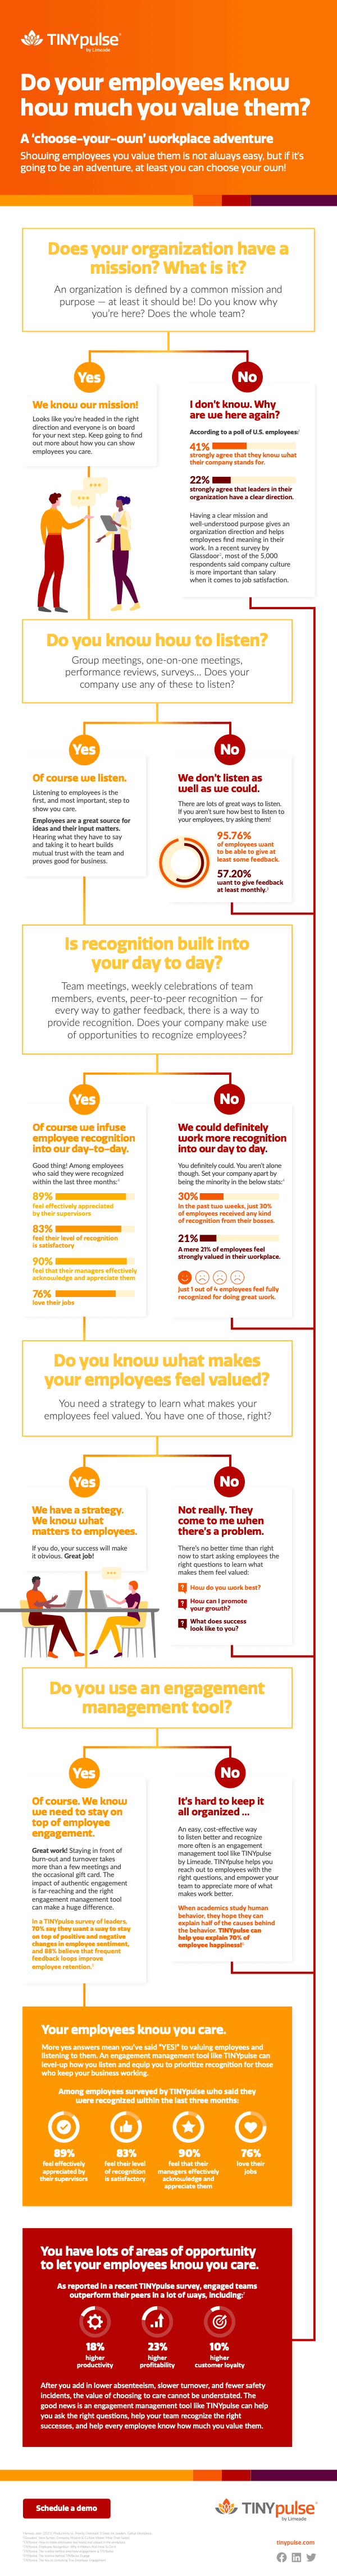 infographic | employees | heard | valued | employee engagement | data | TINYpulse